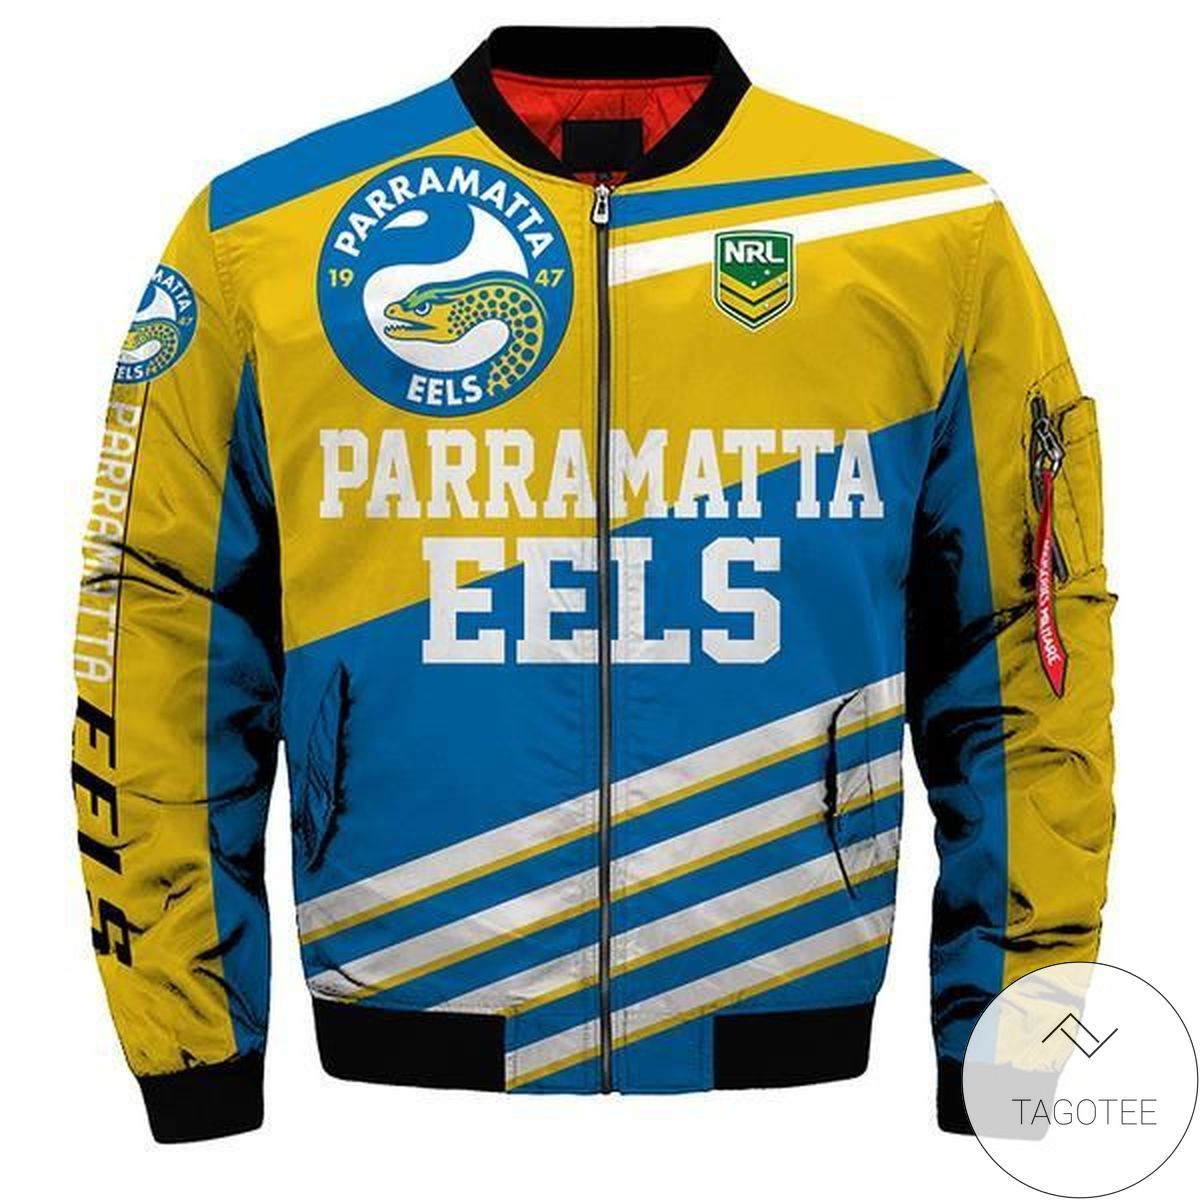 Parramatta Eels Professional Rugby Team 3d Printed Unisex Bomber Jacket